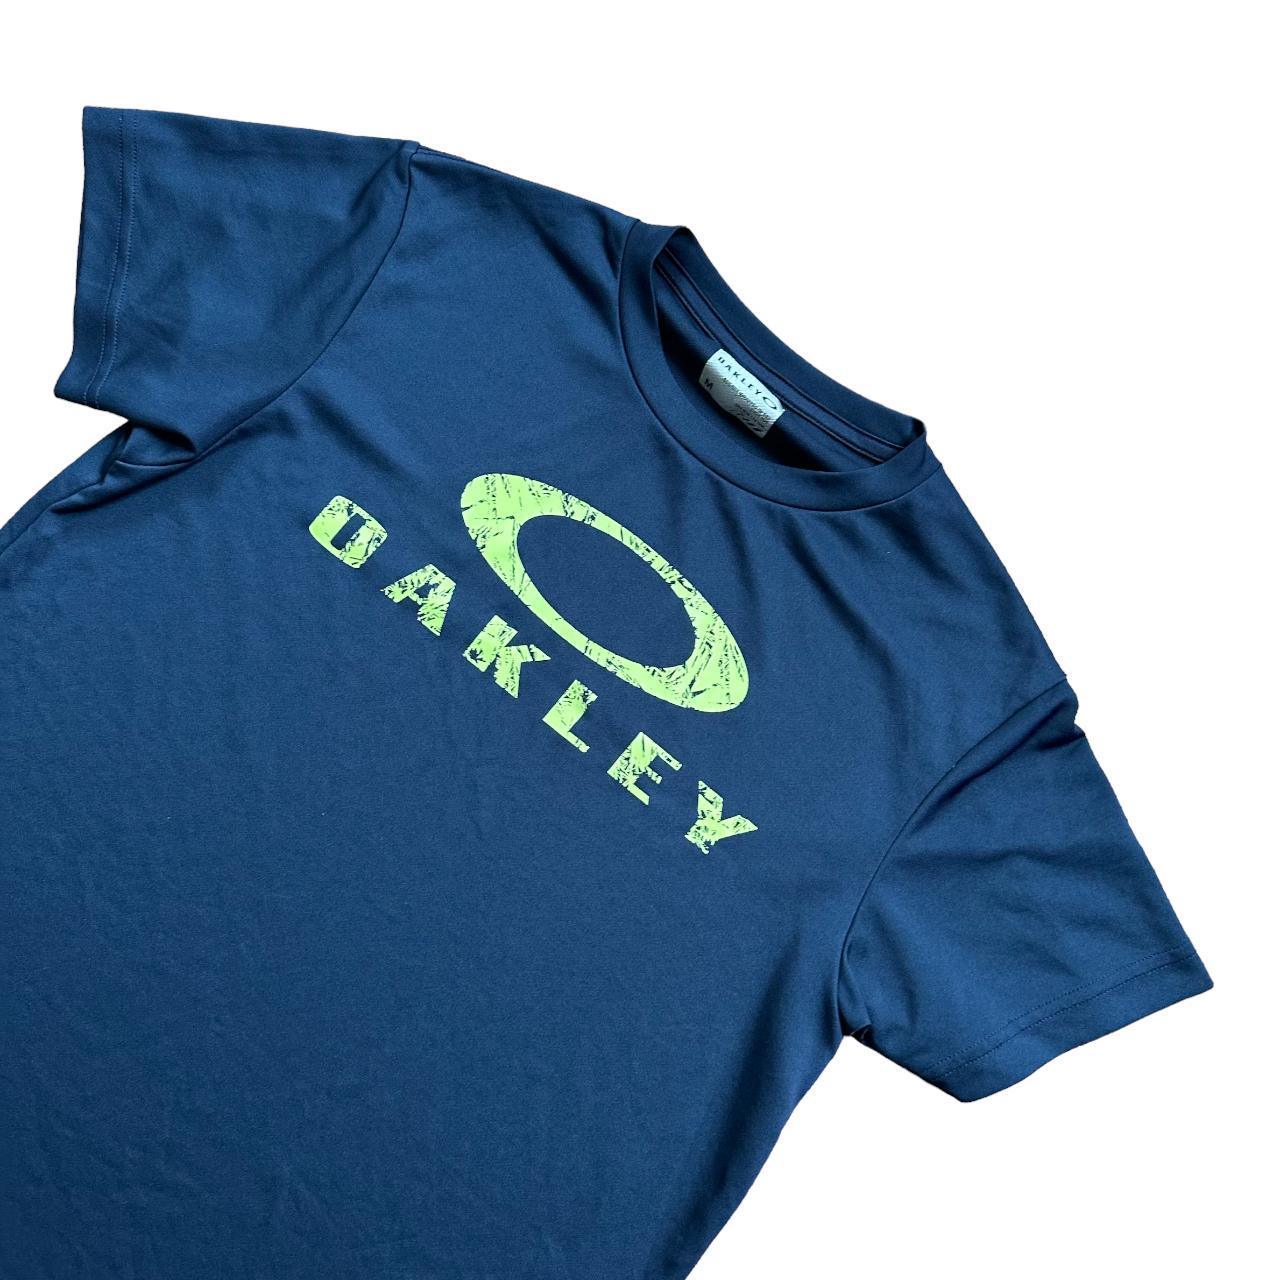 Oakley logo navy short sleeve T shirt - Known Source